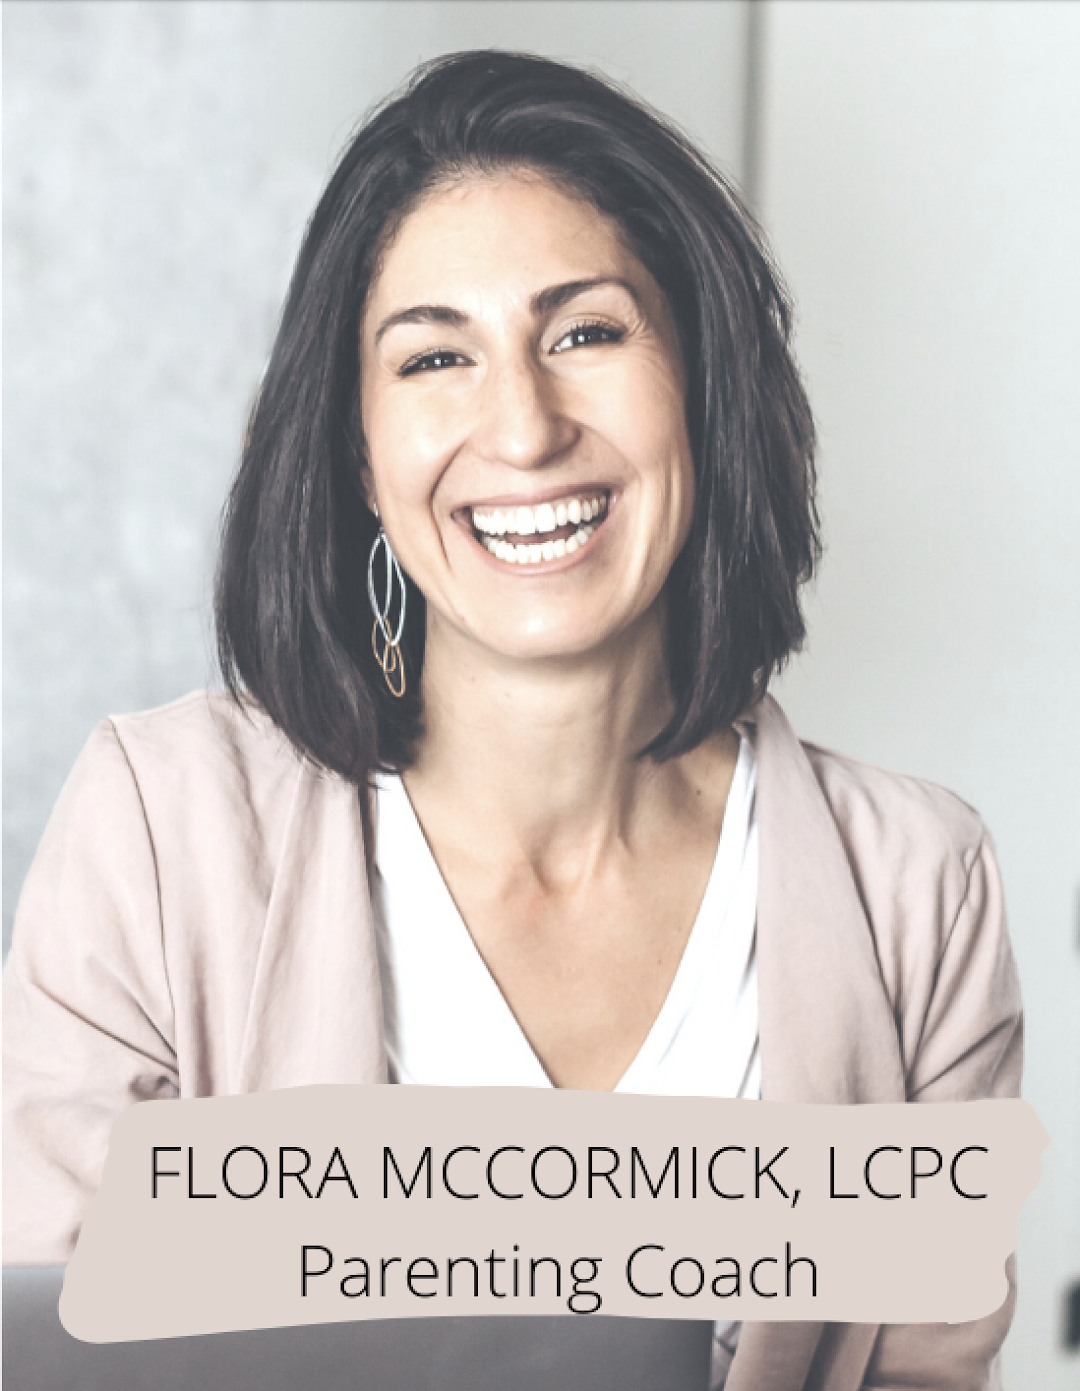 Flora McCormick, LCPC